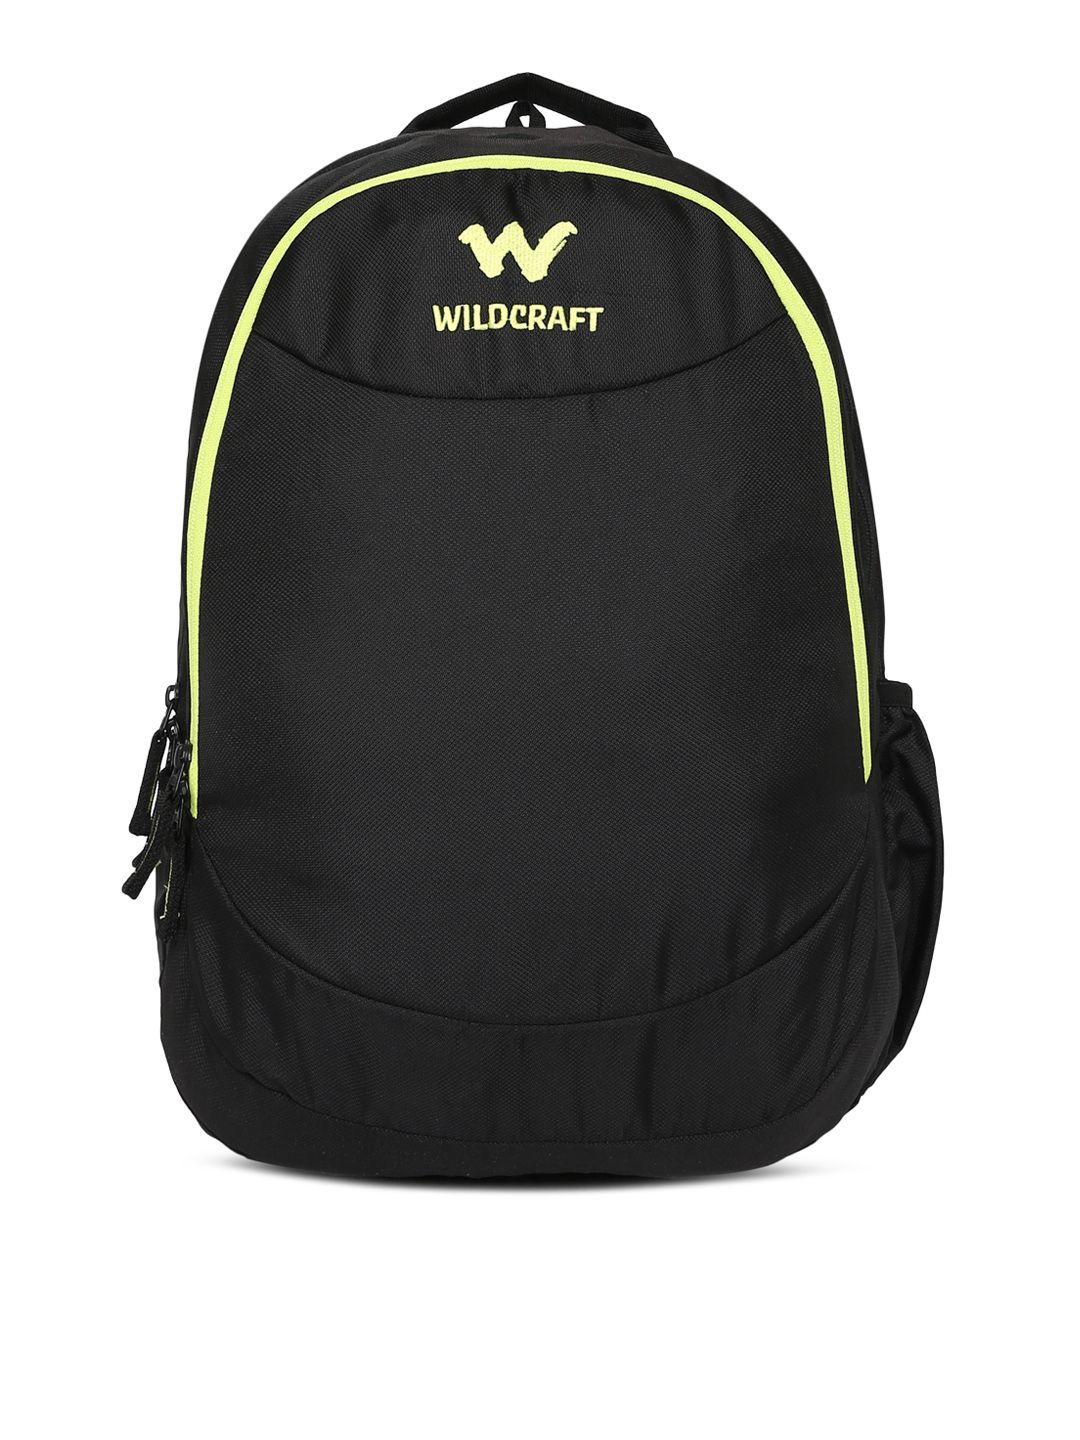 Wildcraft Unisex Black Solid MT BP 1 Backpack Price in India